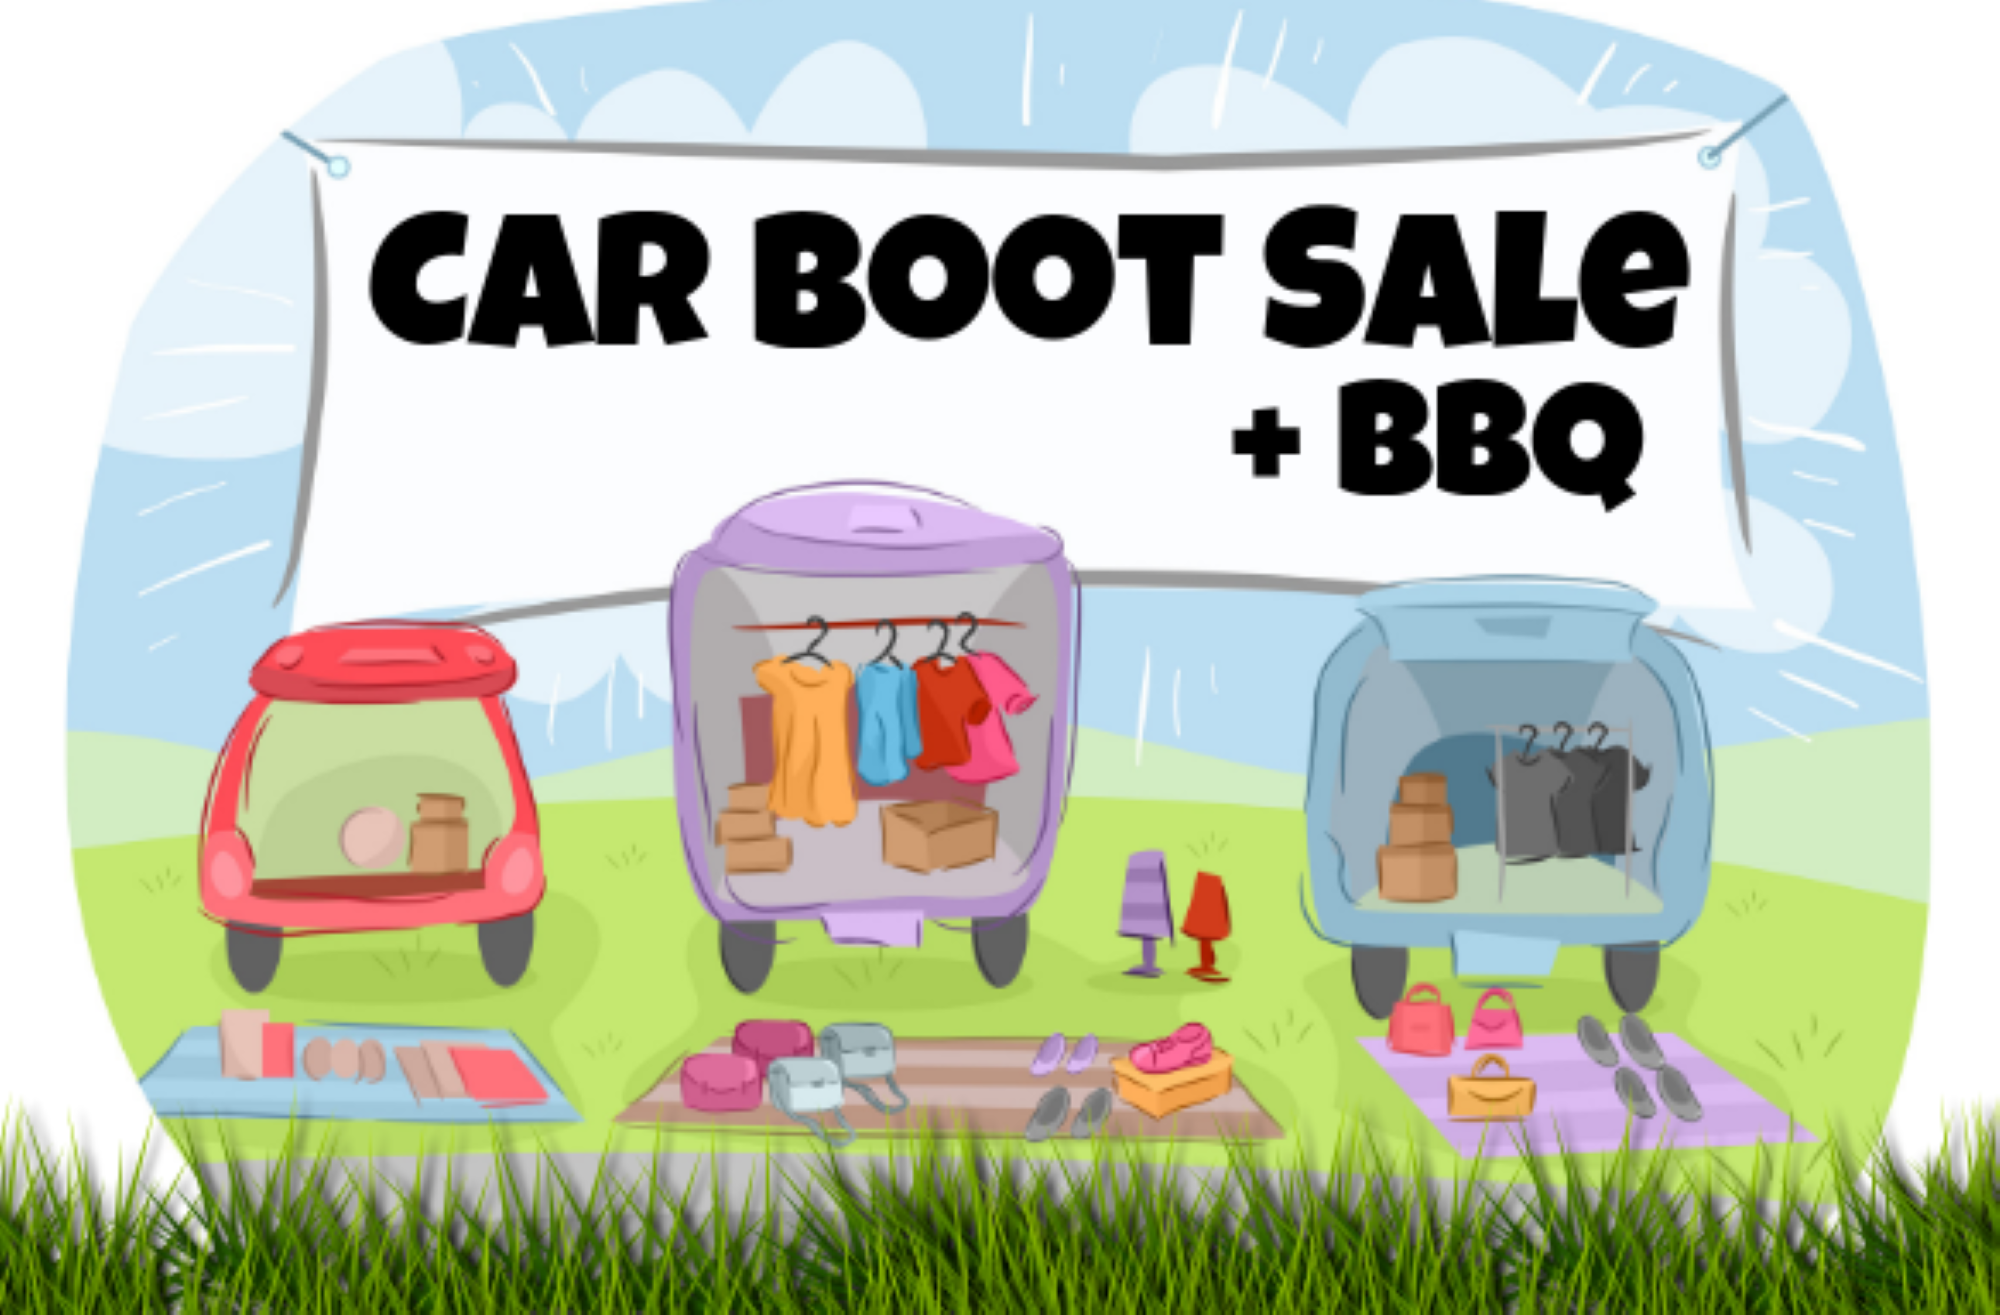 Car Boot Sale + BBQ — Globus Theatre at the LAB